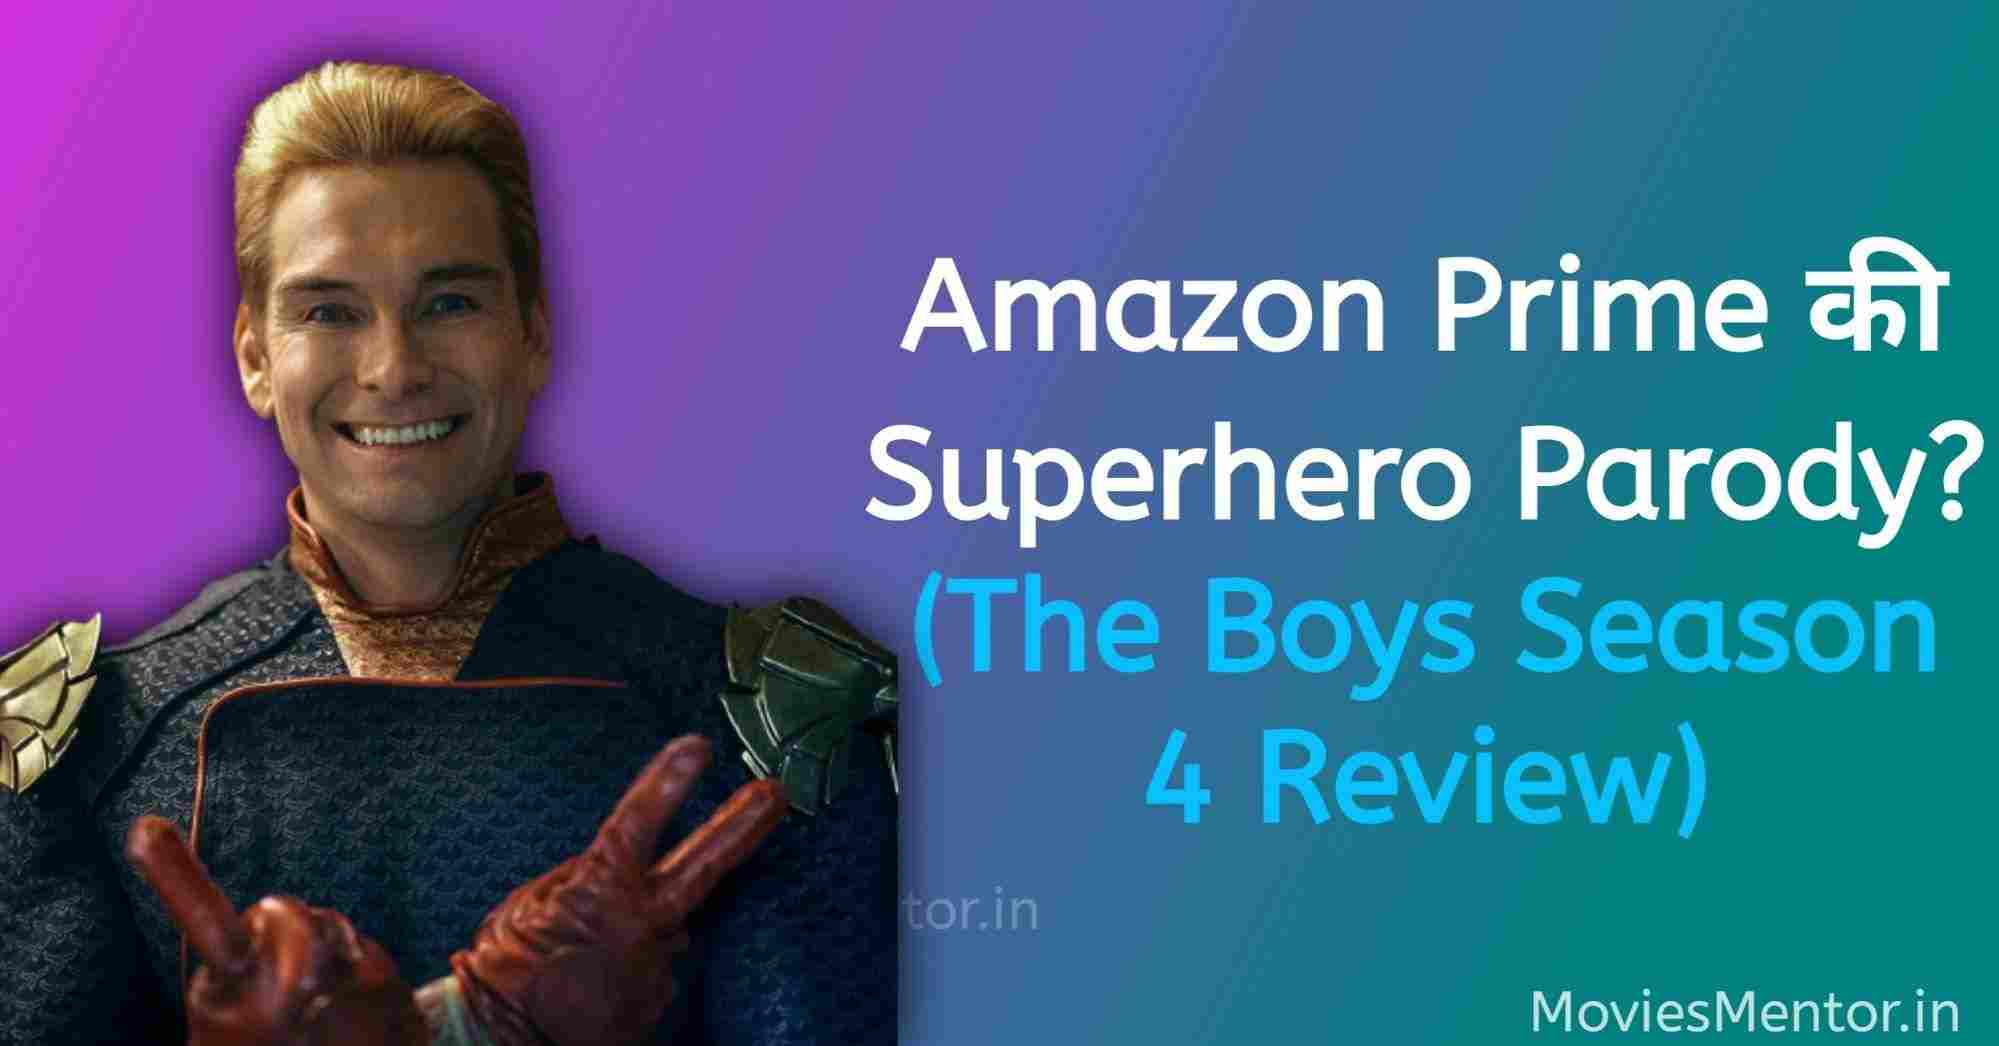 Wild Superhero Series? The Boys Season 3 Review